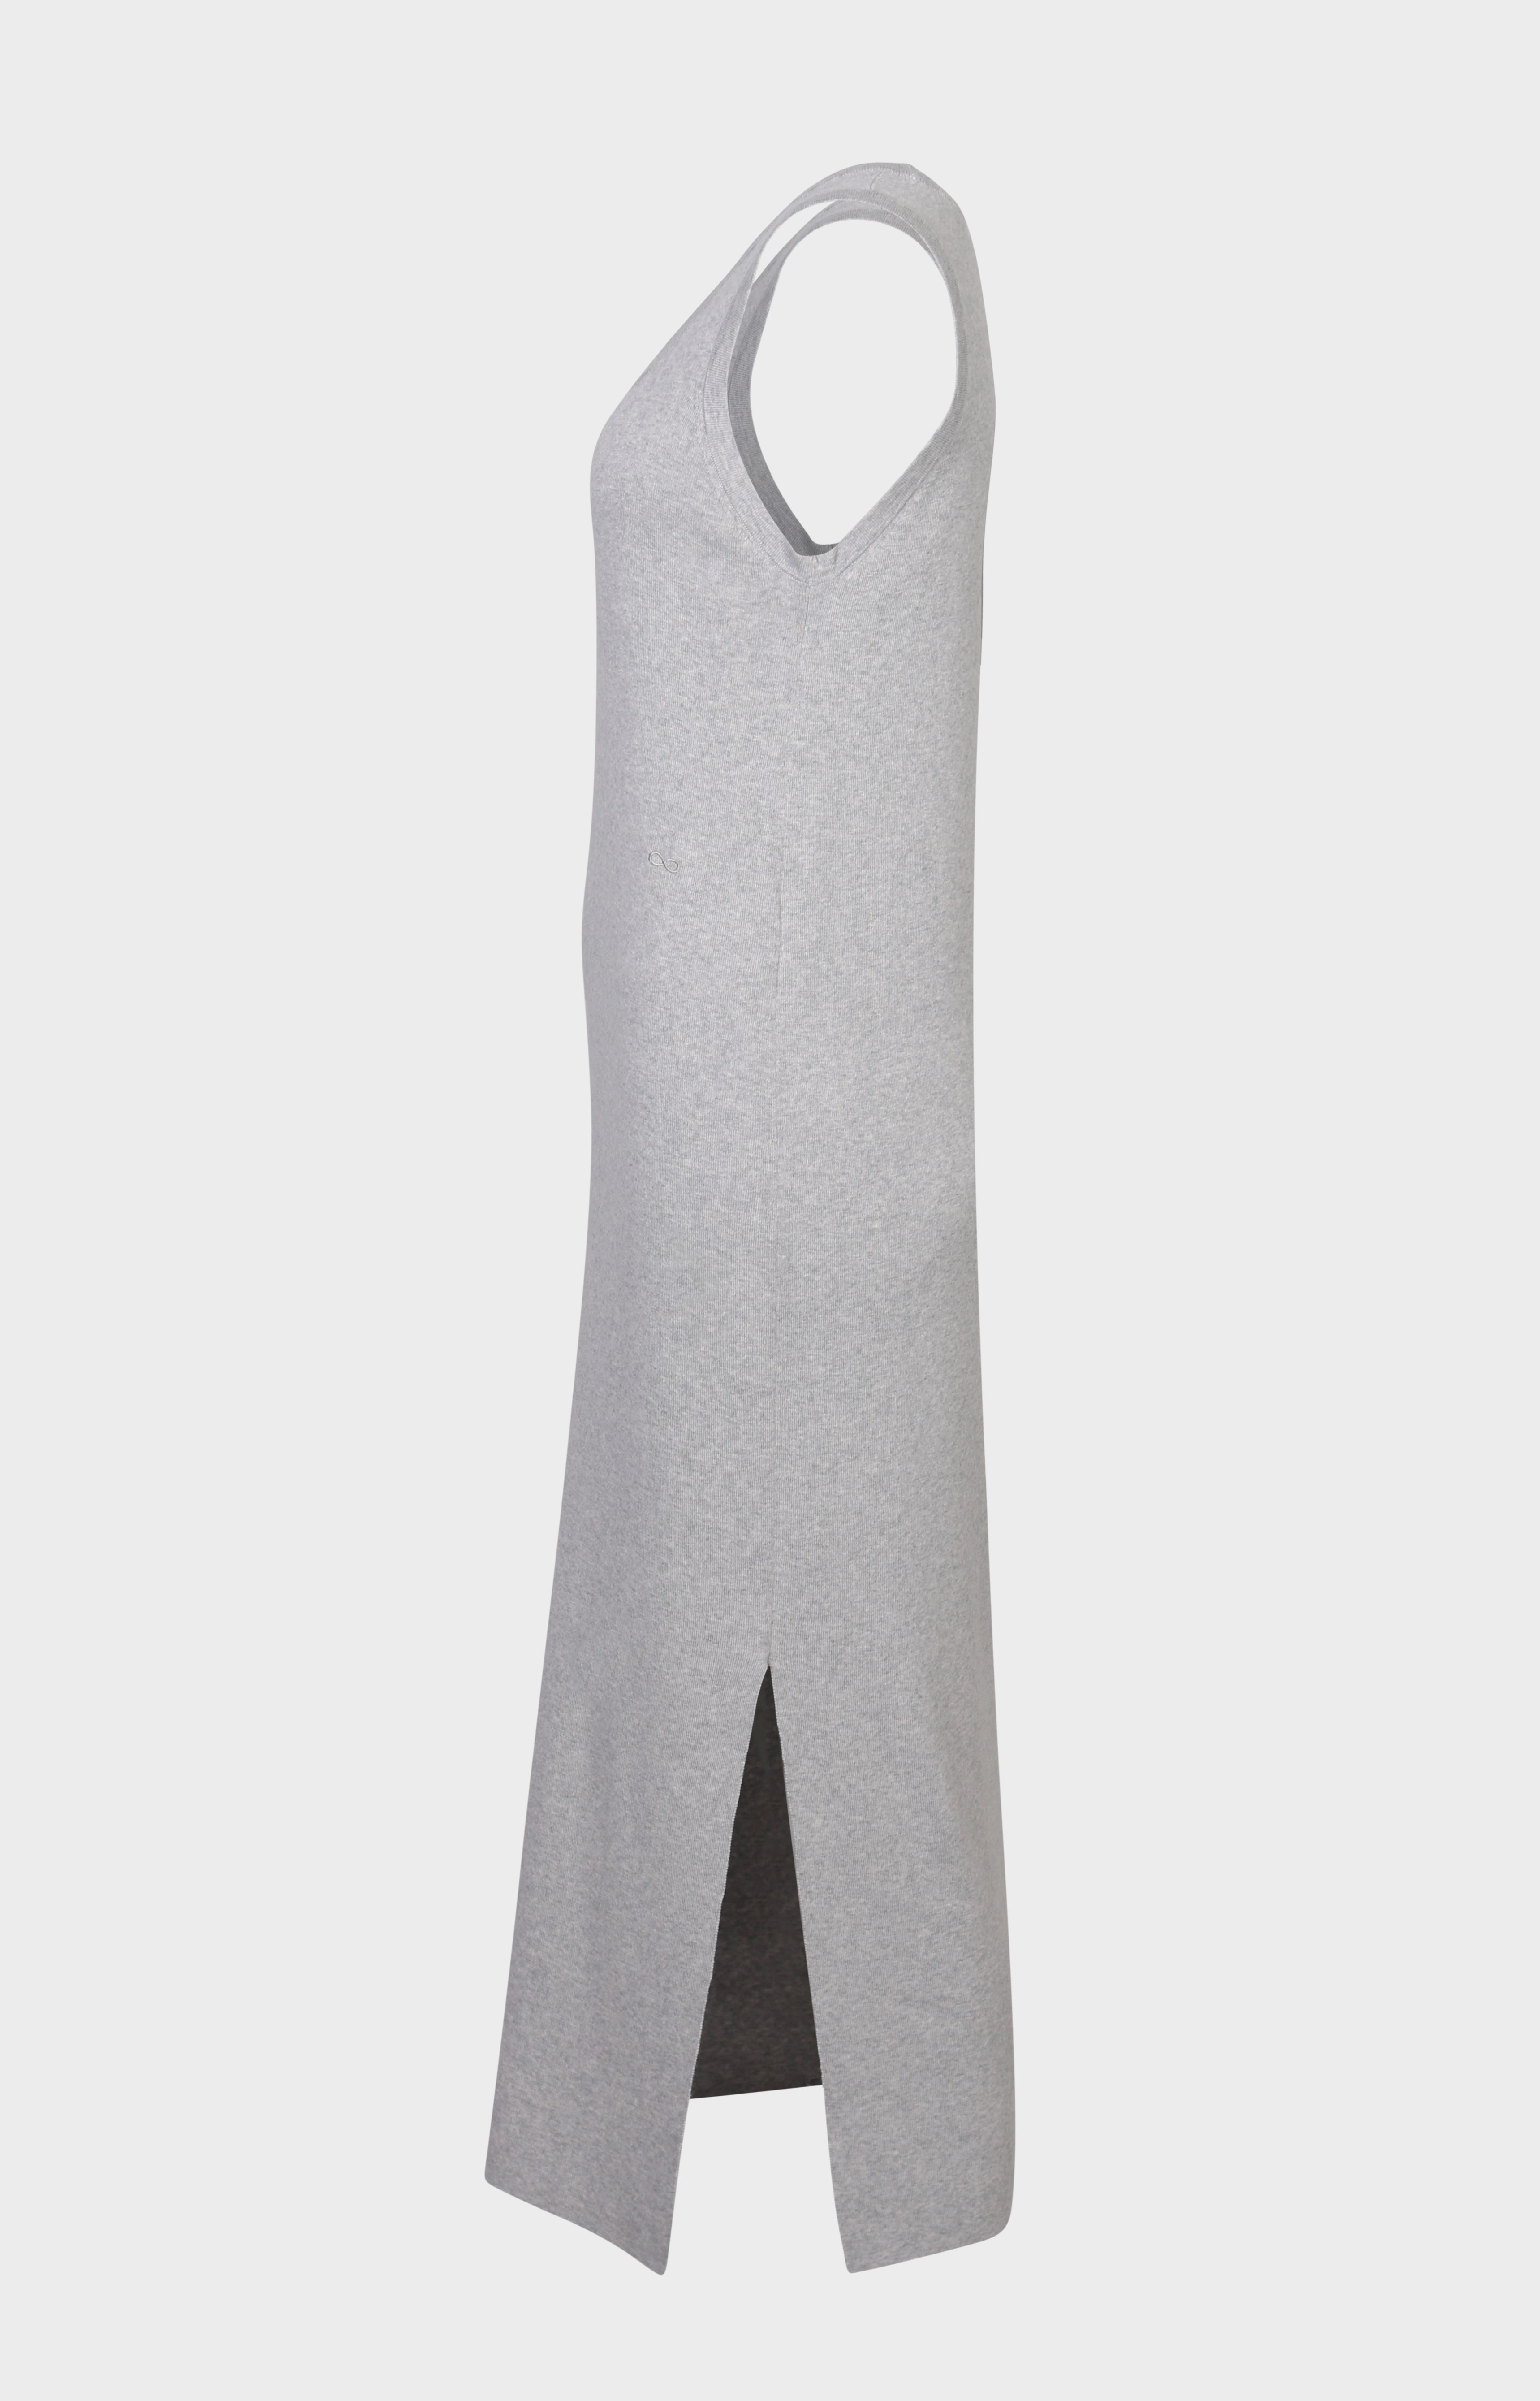 SMINFINITY Comfy Knit Maxi Tank Dress in Heather Grey XS/S